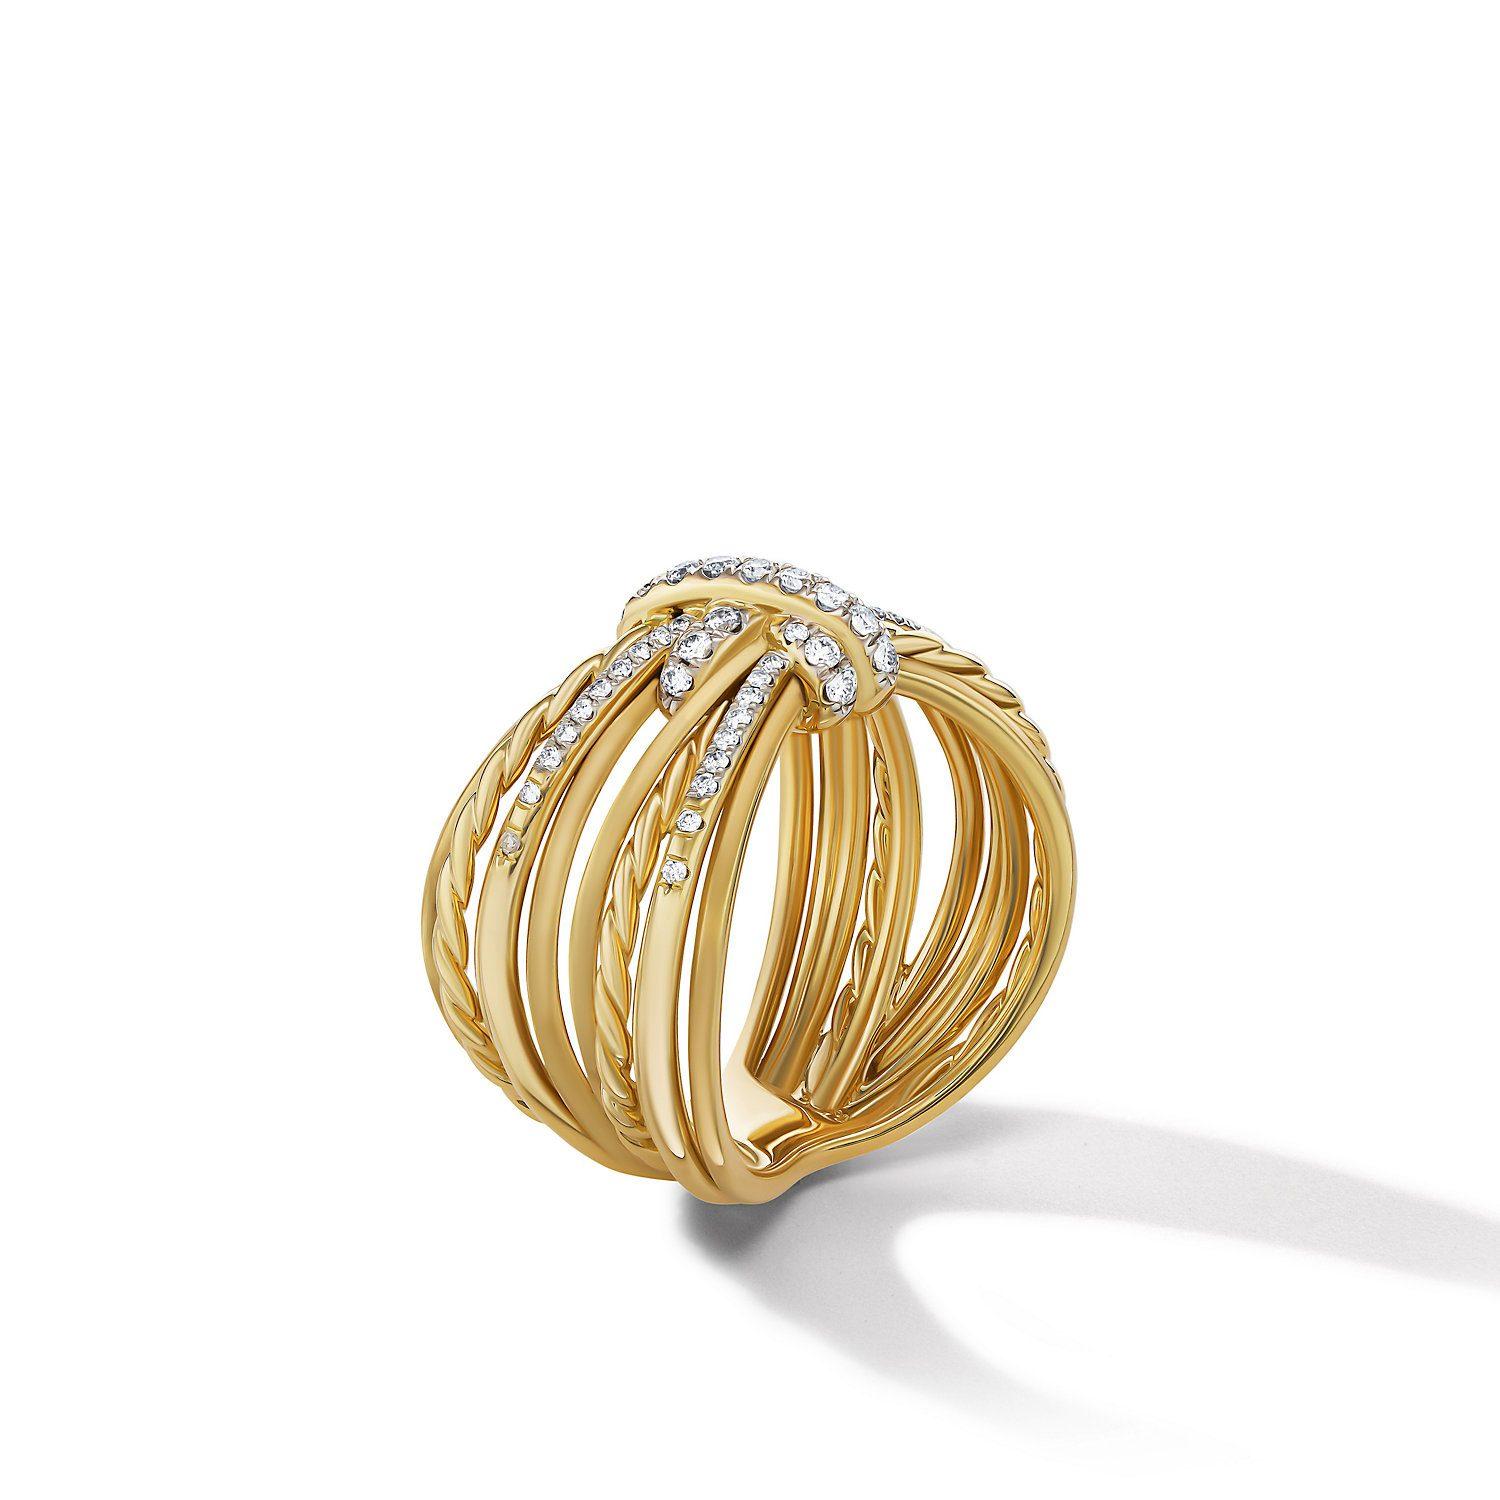 David Yurman Angelika Maltese Ring in 18K Yellow Gold with Pave Diamonds 3